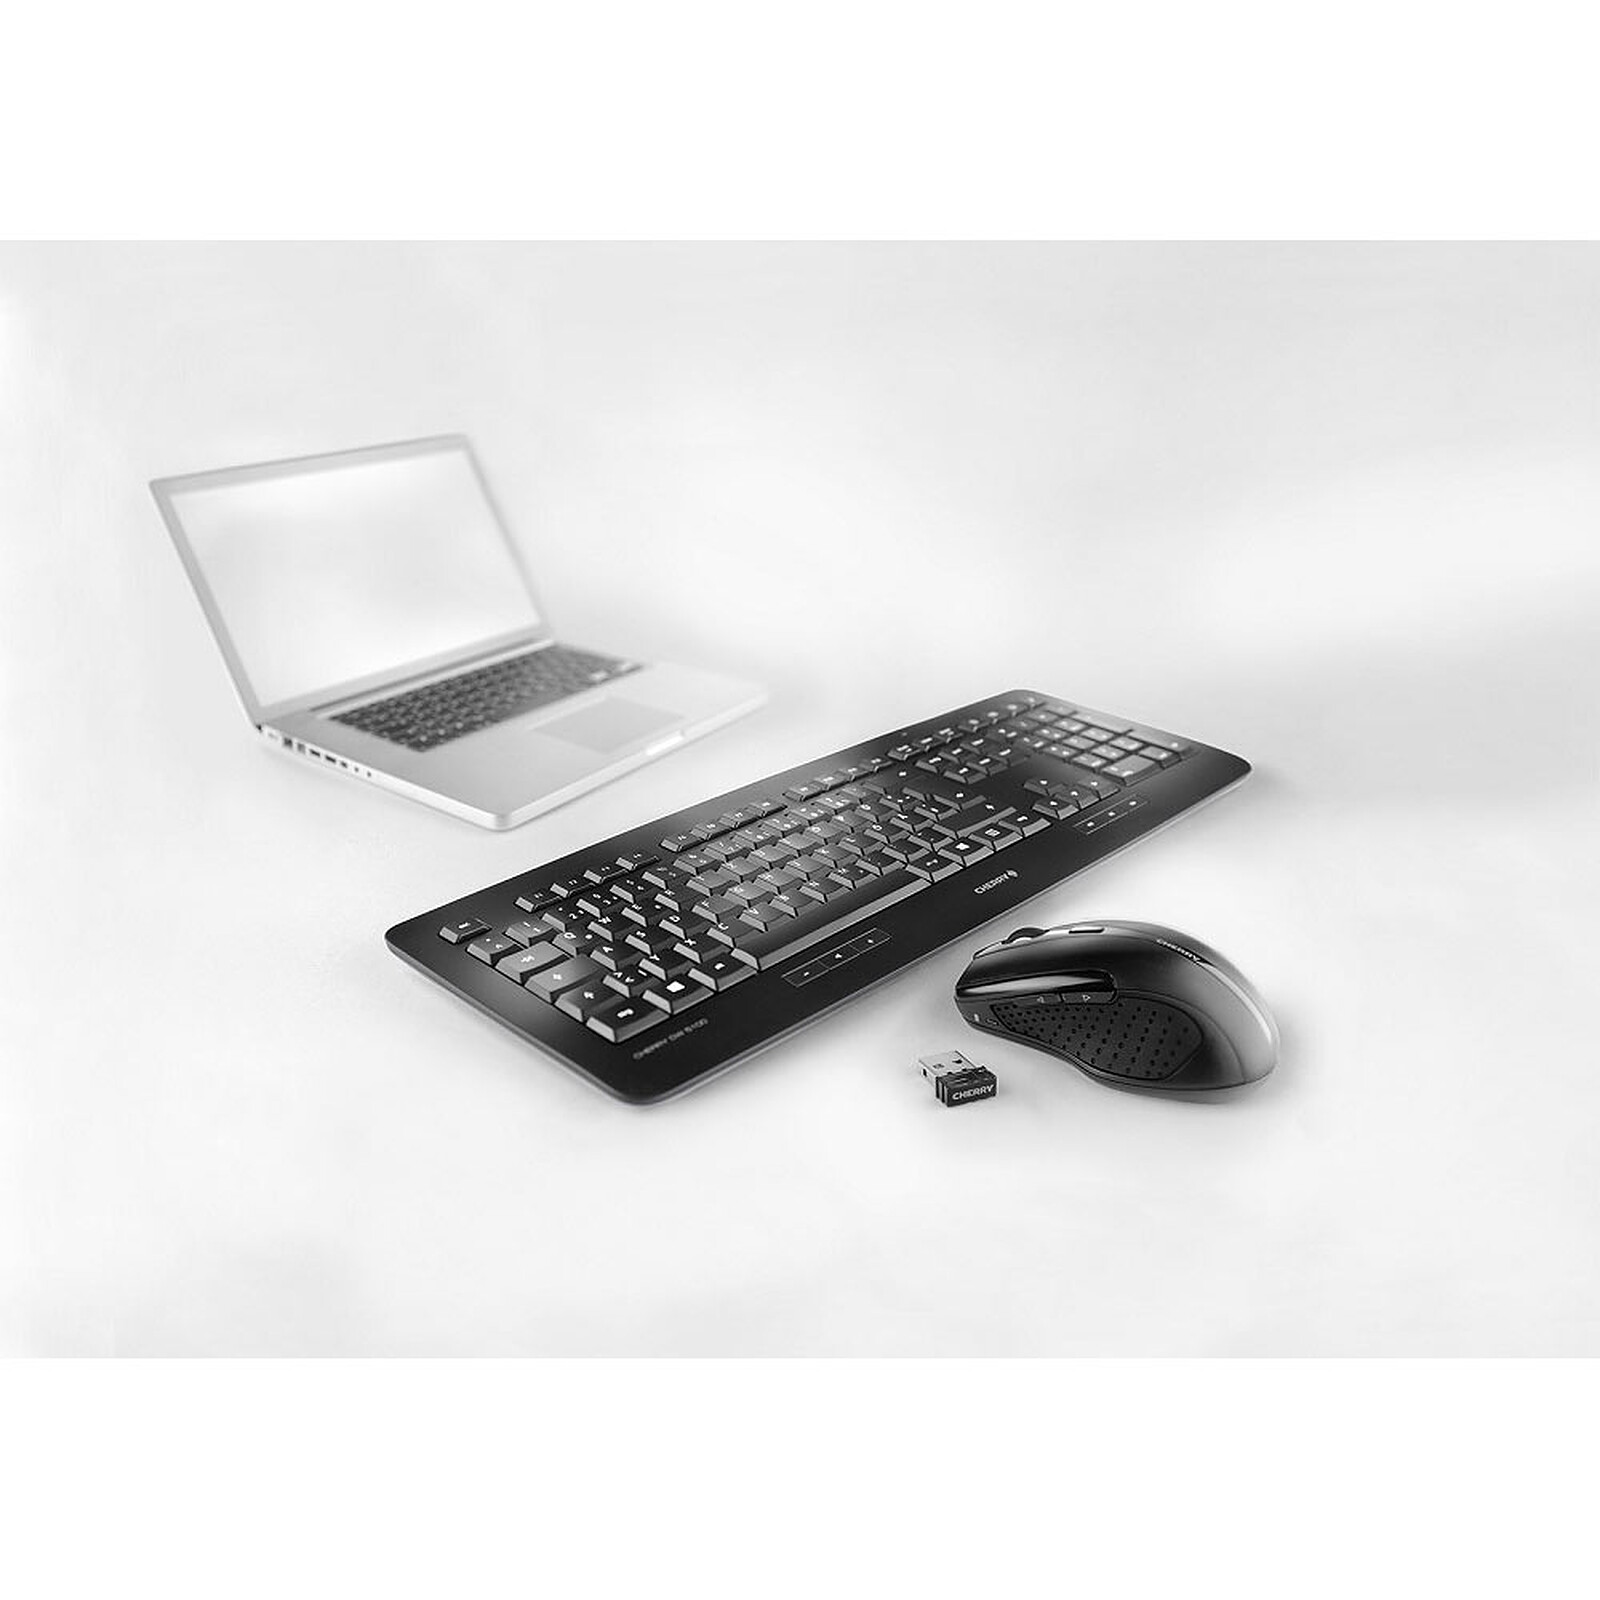 & 5100 Keyboard - DW - 3-year set warranty LDLC v2 Cherry mouse